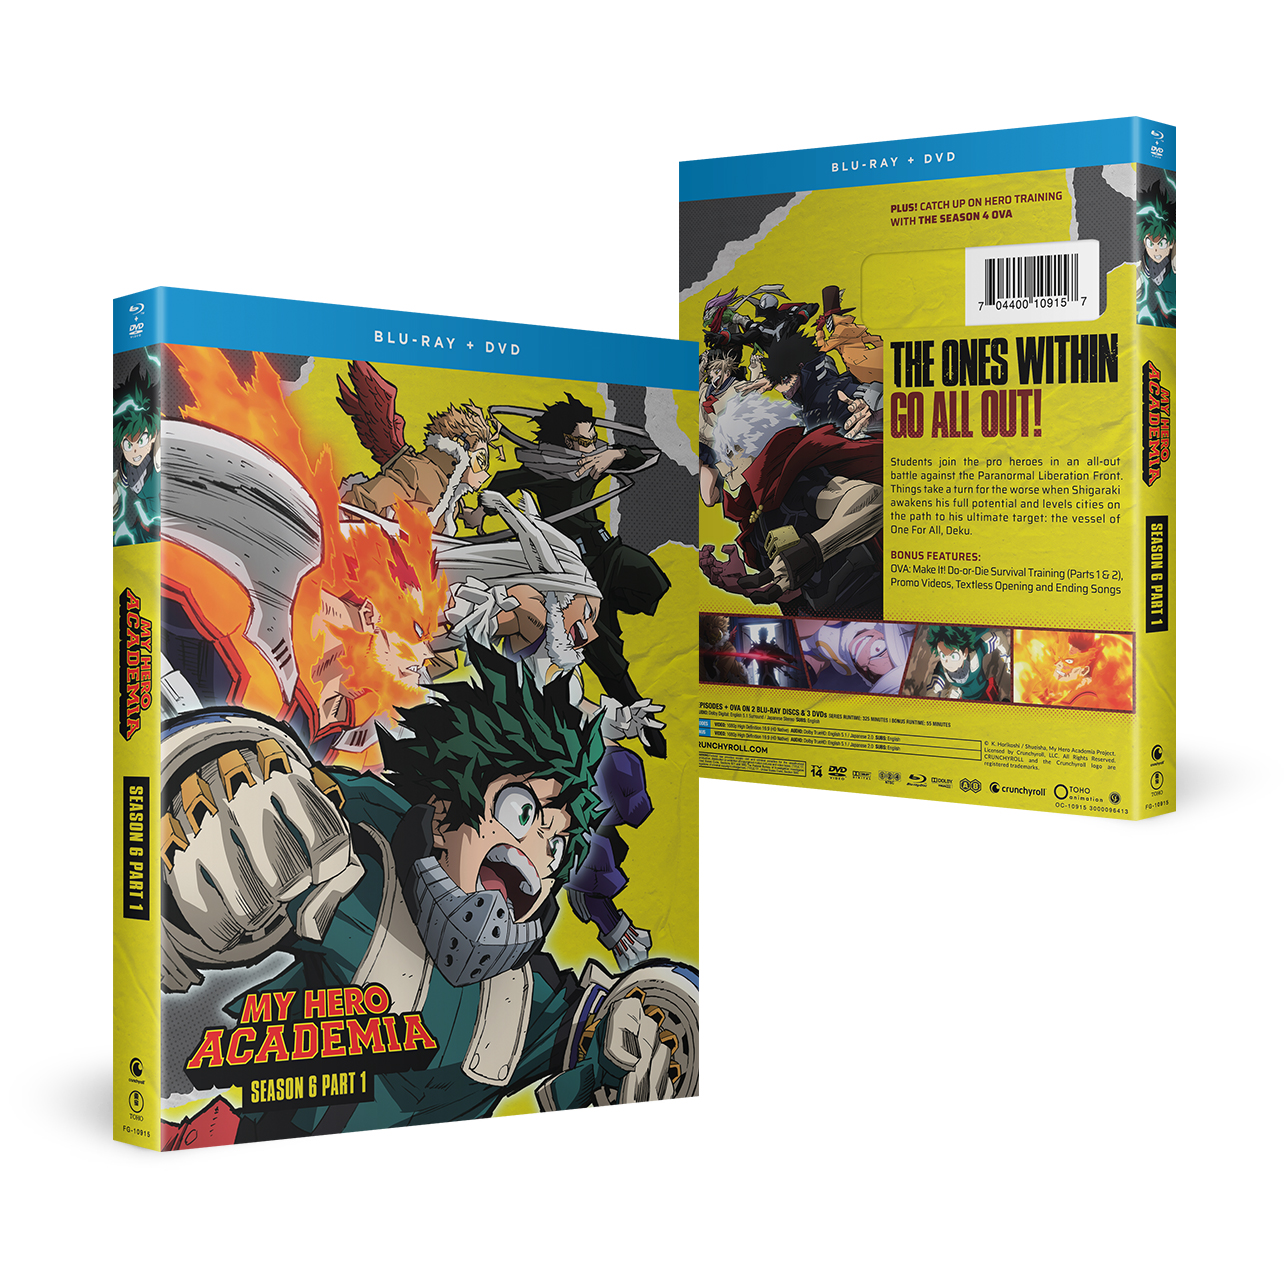 My Hero Academia - Season 6 Part 1 - Blu-ray + DVD image count 0